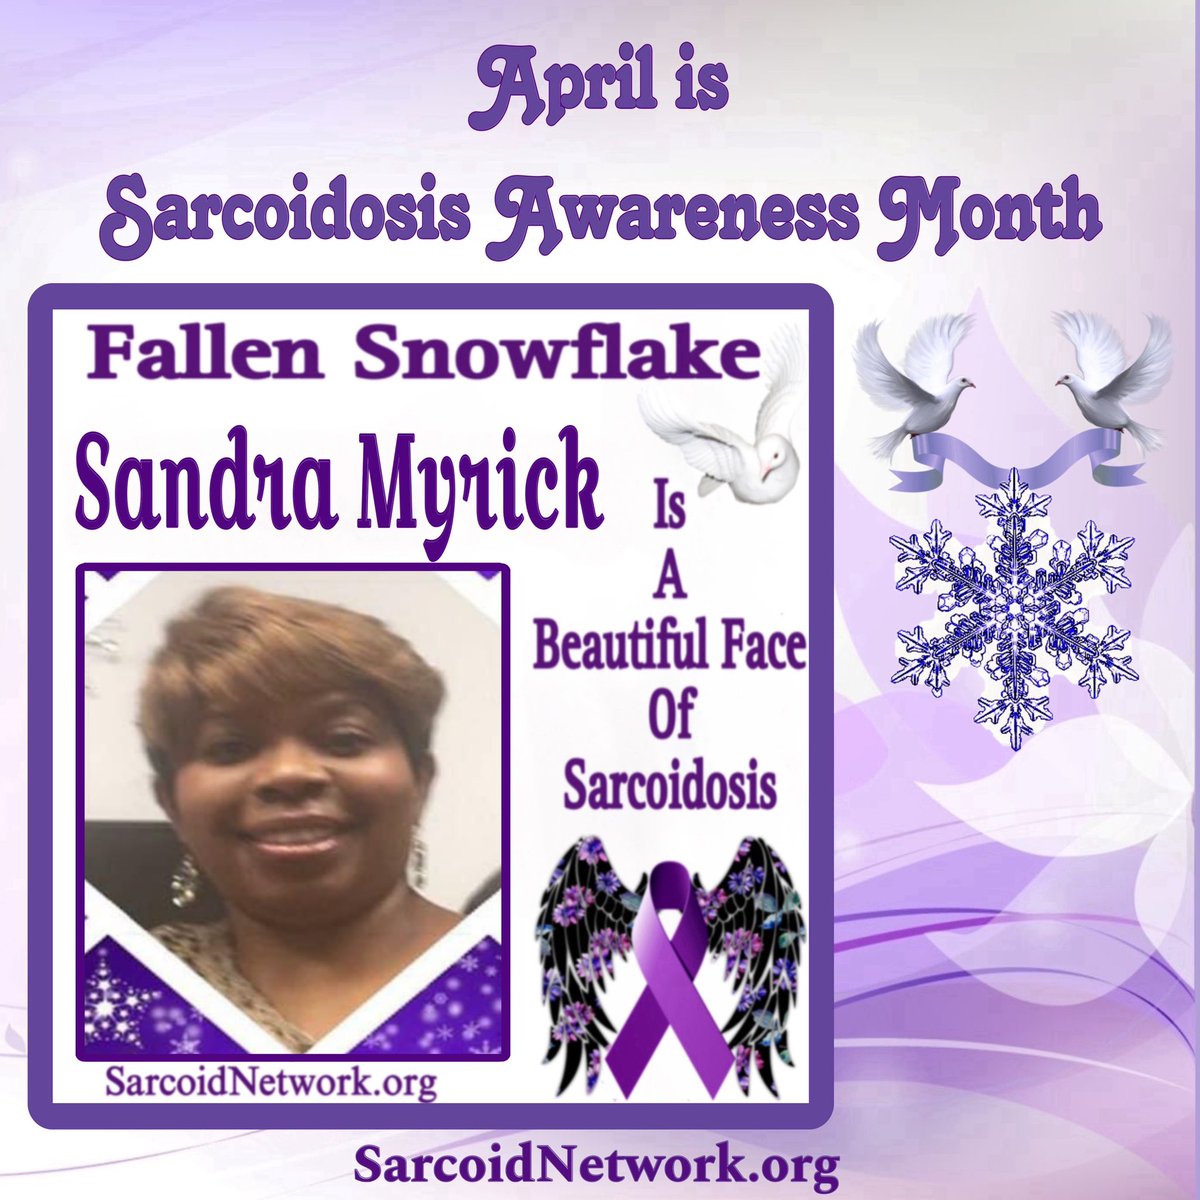 This is our Sarcoidosis Sister Fallen Snowflake Sandra Myrick and she is a Beautiful Face of Sarcoidosis!💜 #Sarcoidosis #raredisease #preciousmemories #patientadvocate #sarcoidosisadvocate #beautifulfacesofsarcoidosis #sarcoidosisawarenessmonth